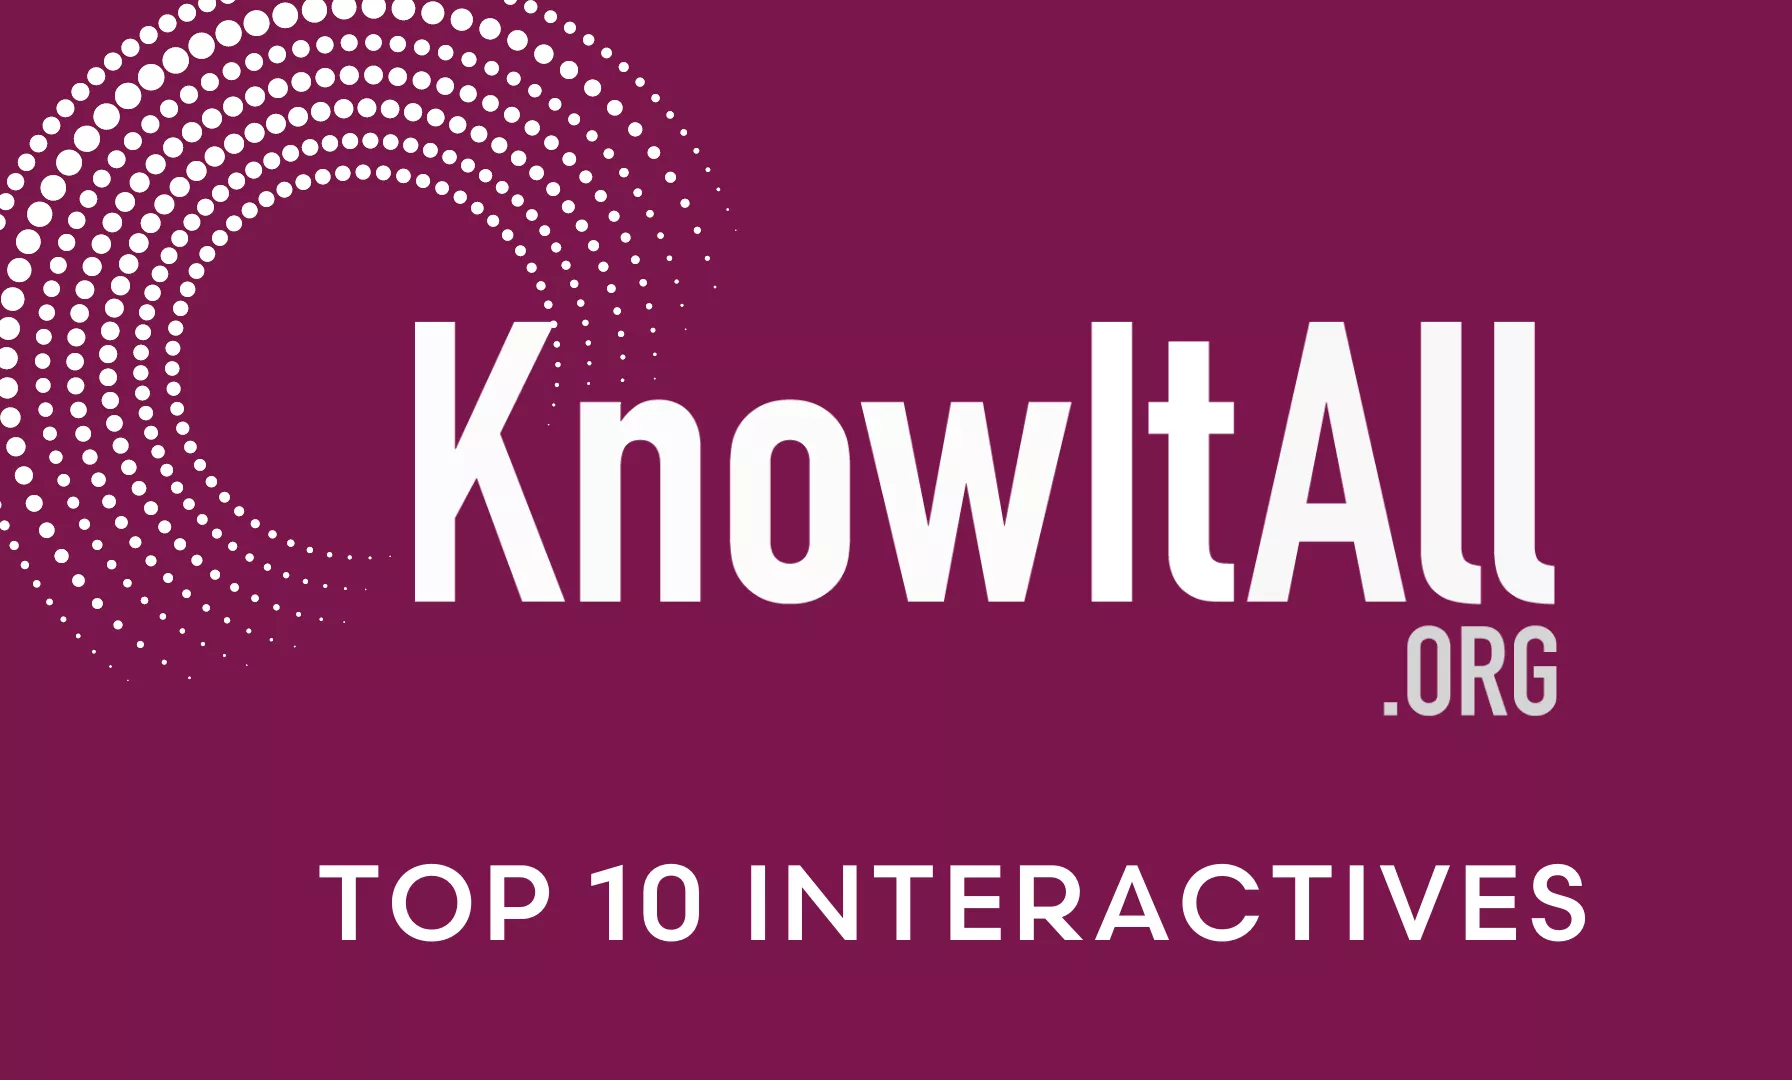 Top 10 Interactives